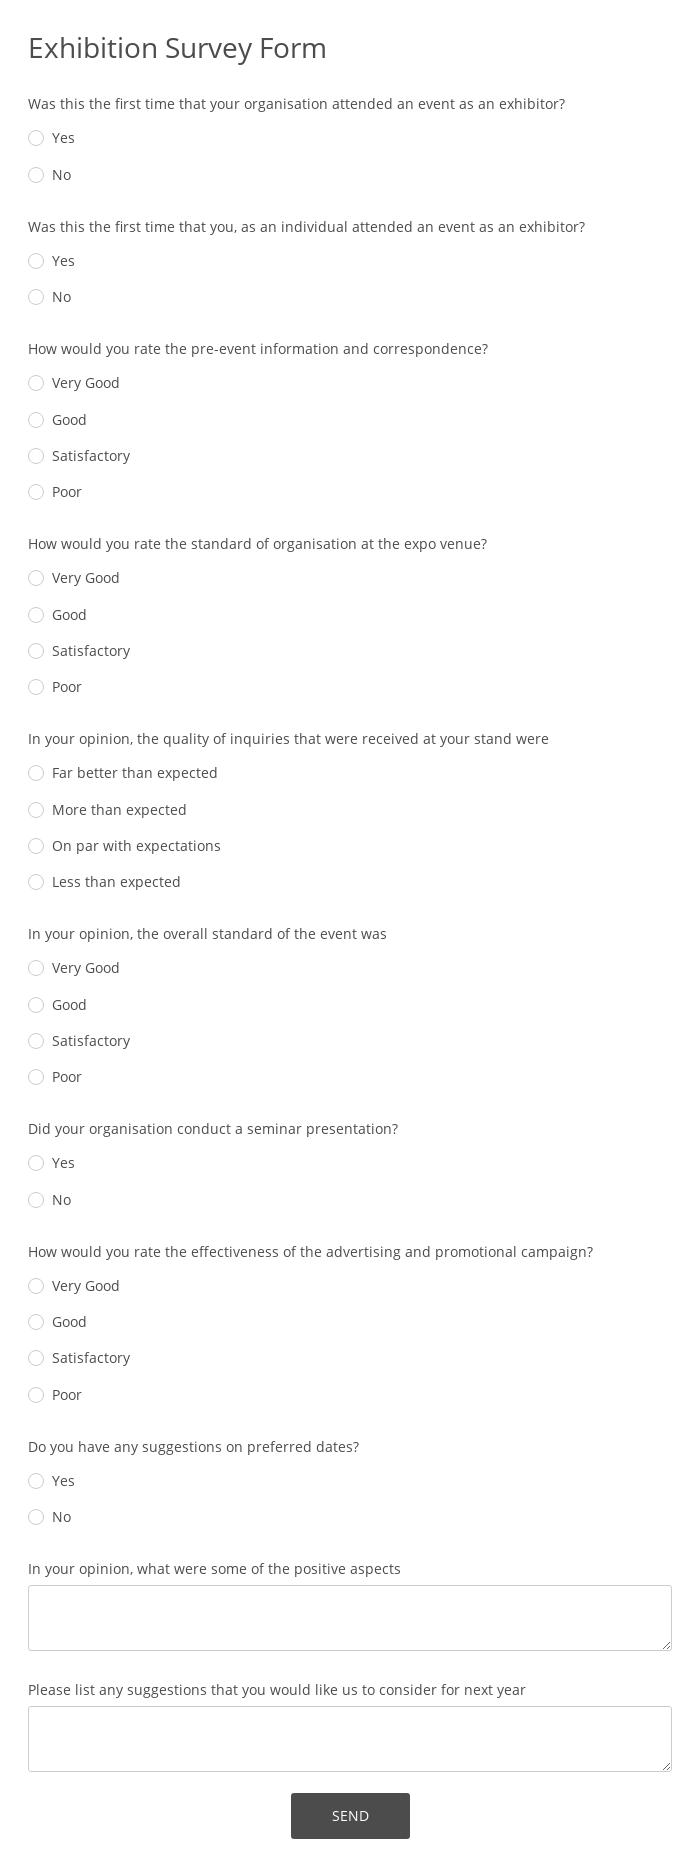 Exhibition Survey Form